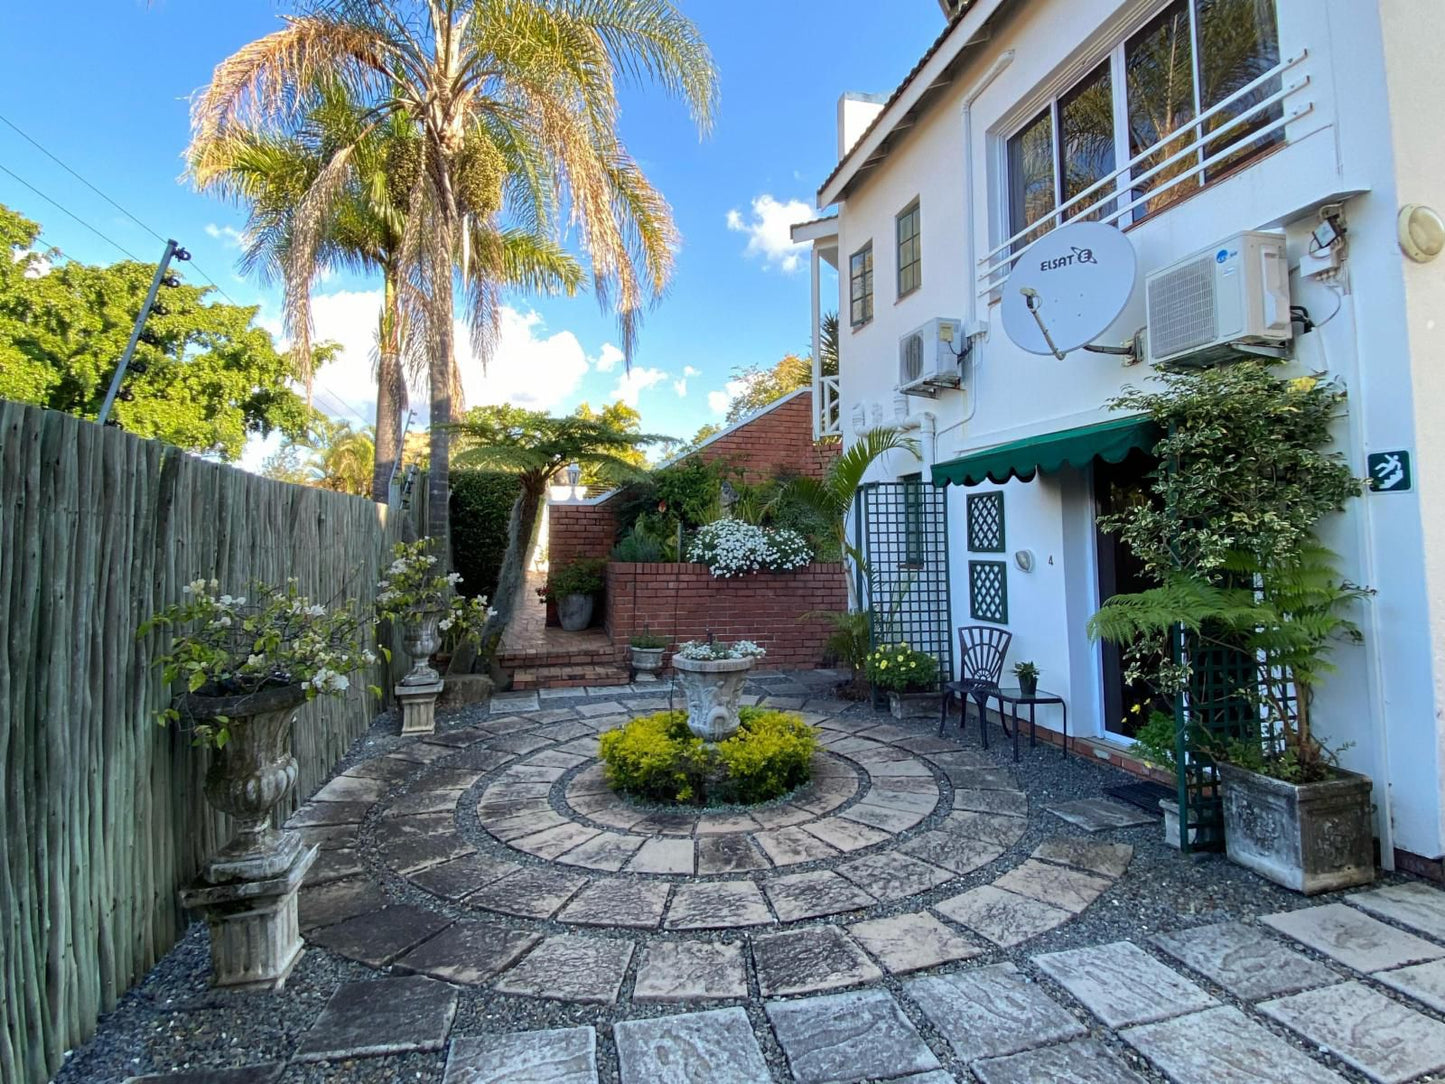 Shandon Lodge Nelspruit Mpumalanga South Africa House, Building, Architecture, Palm Tree, Plant, Nature, Wood, Garden